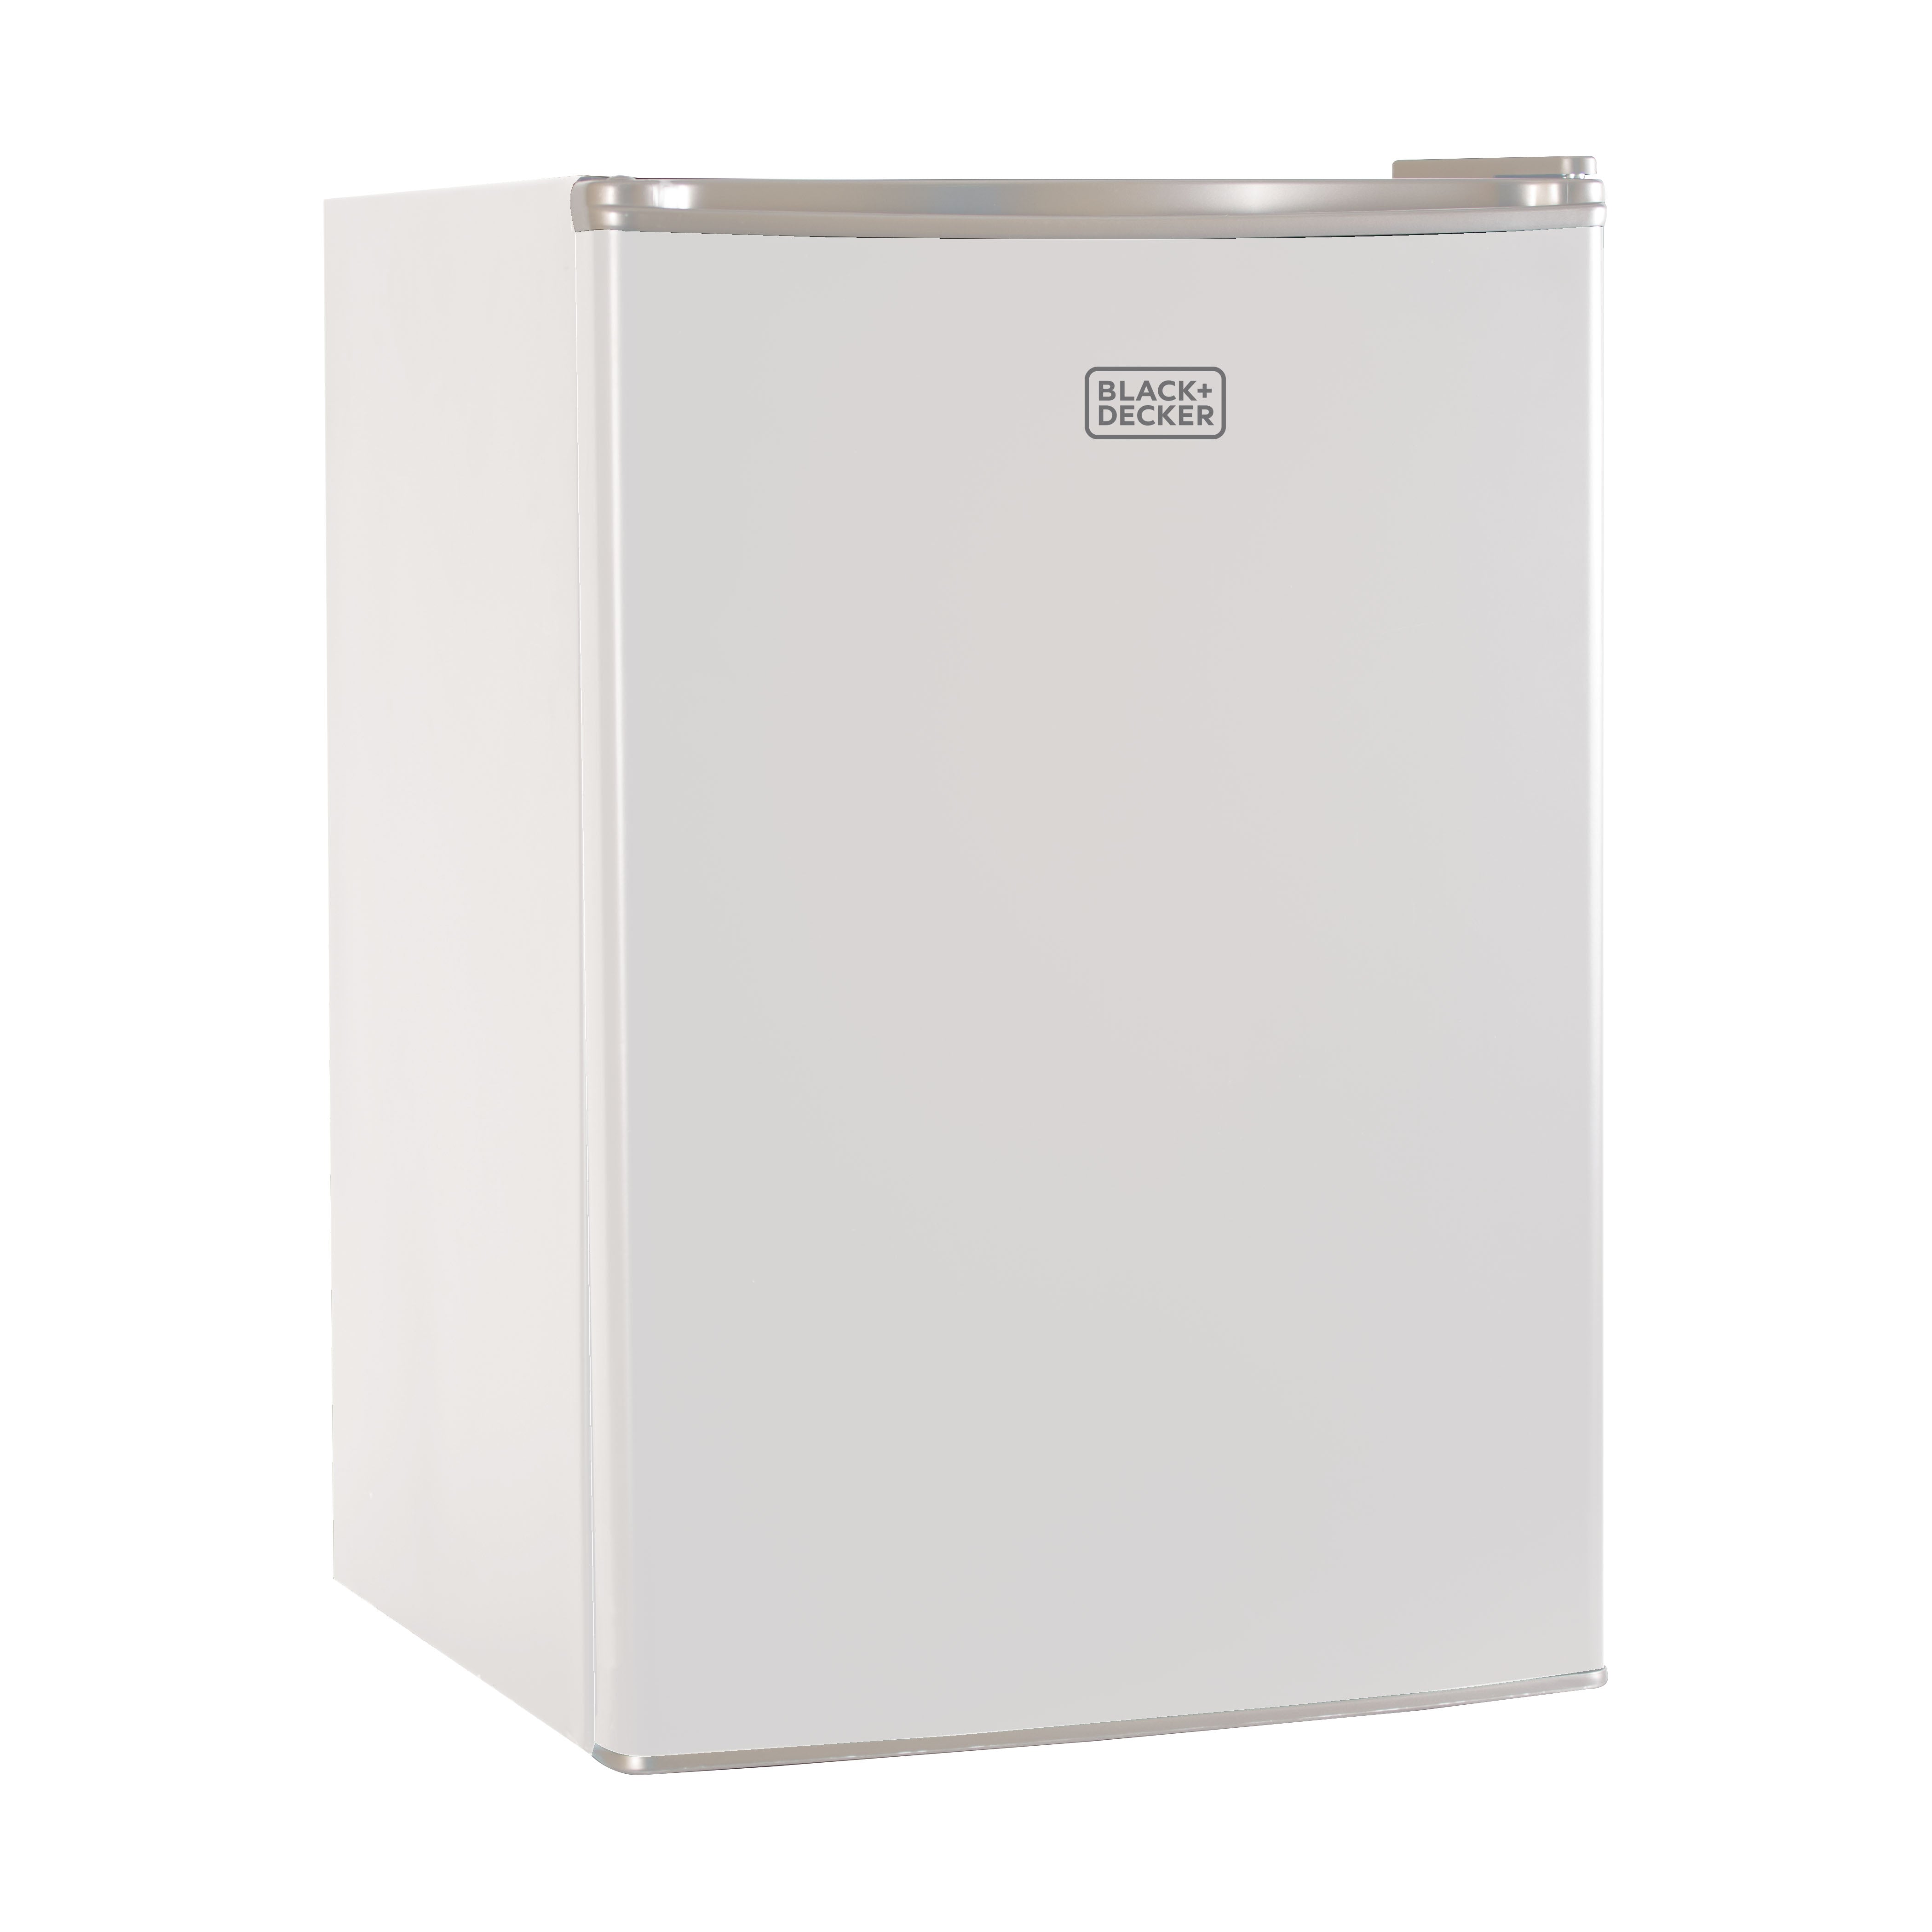 BLACK+DECKER Compact Refrigerator 2.5 Cu. Ft. with True Freezer, White